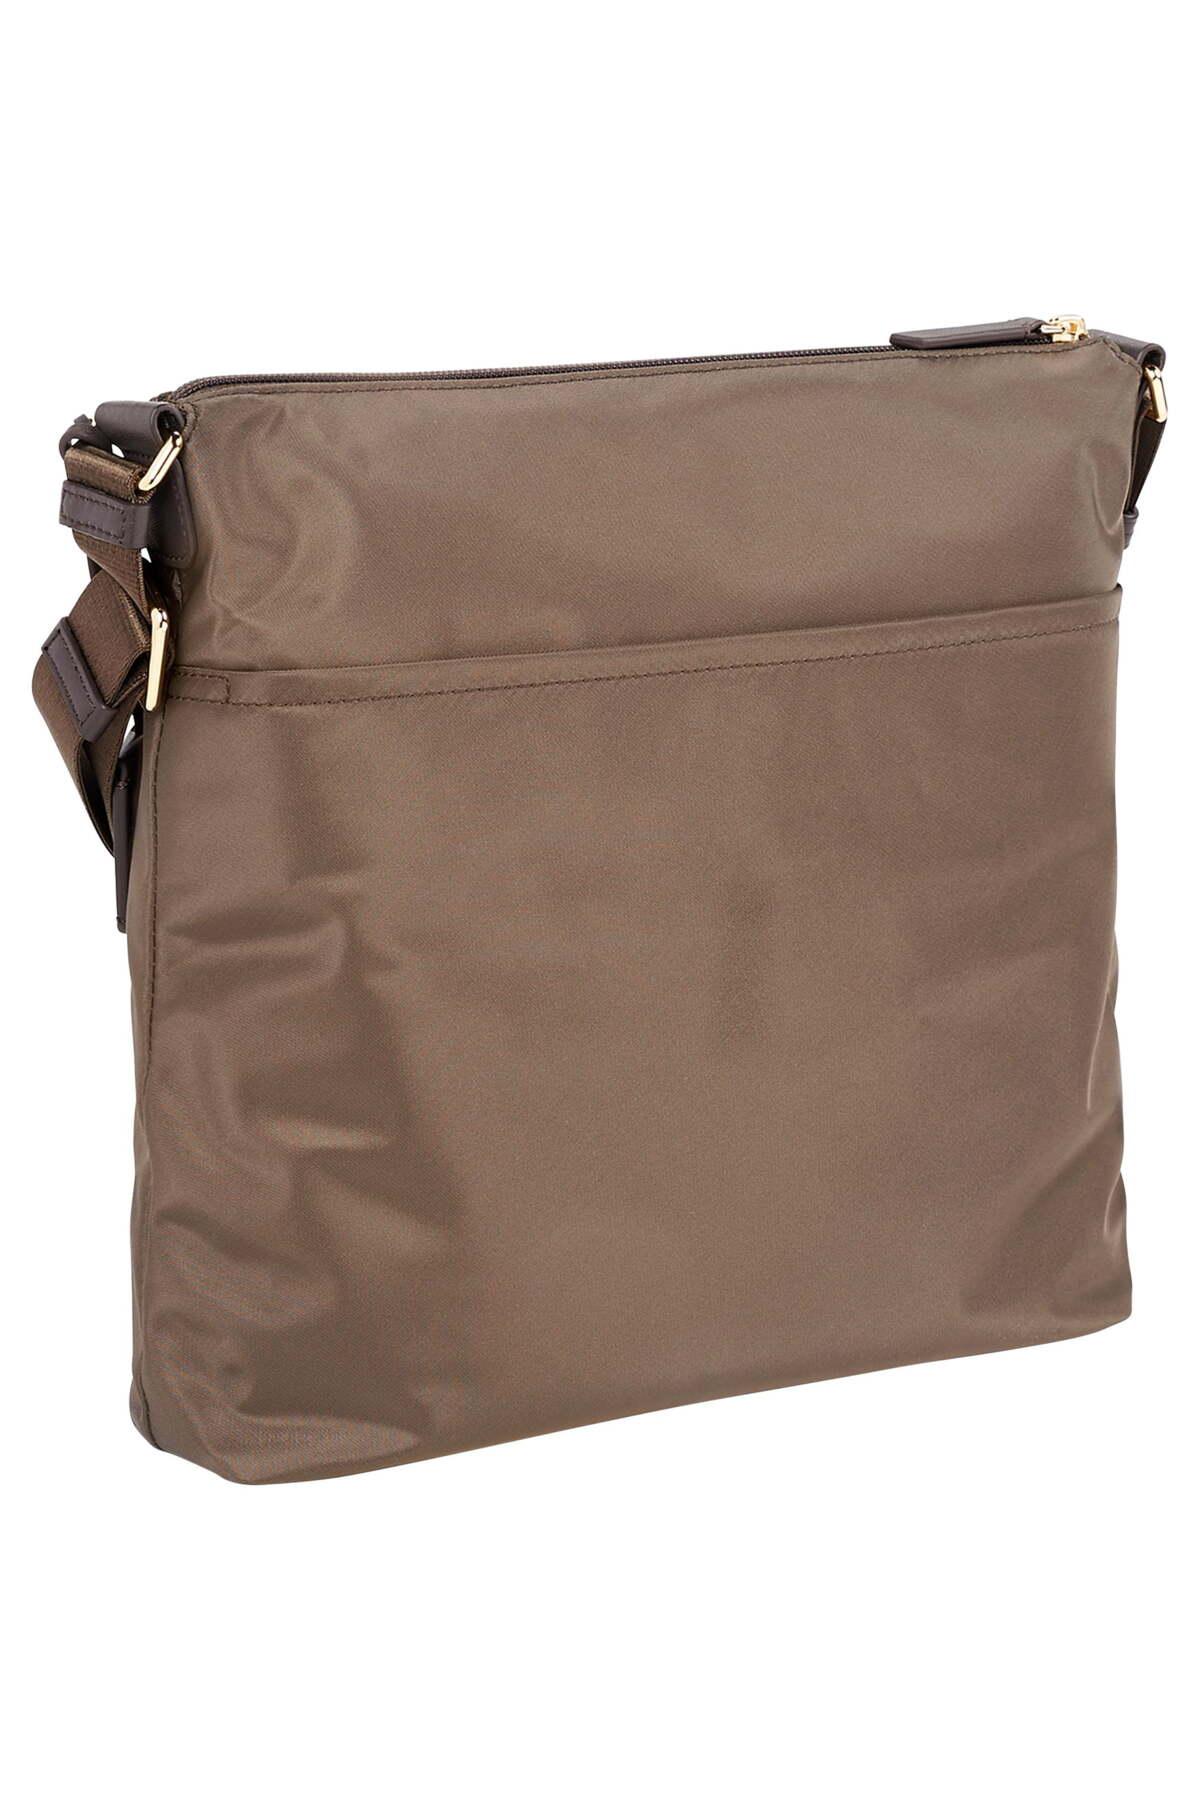 Tumi Voyageur - Canton Nylon Crossbody Bag in Mink (Brown) | Lyst